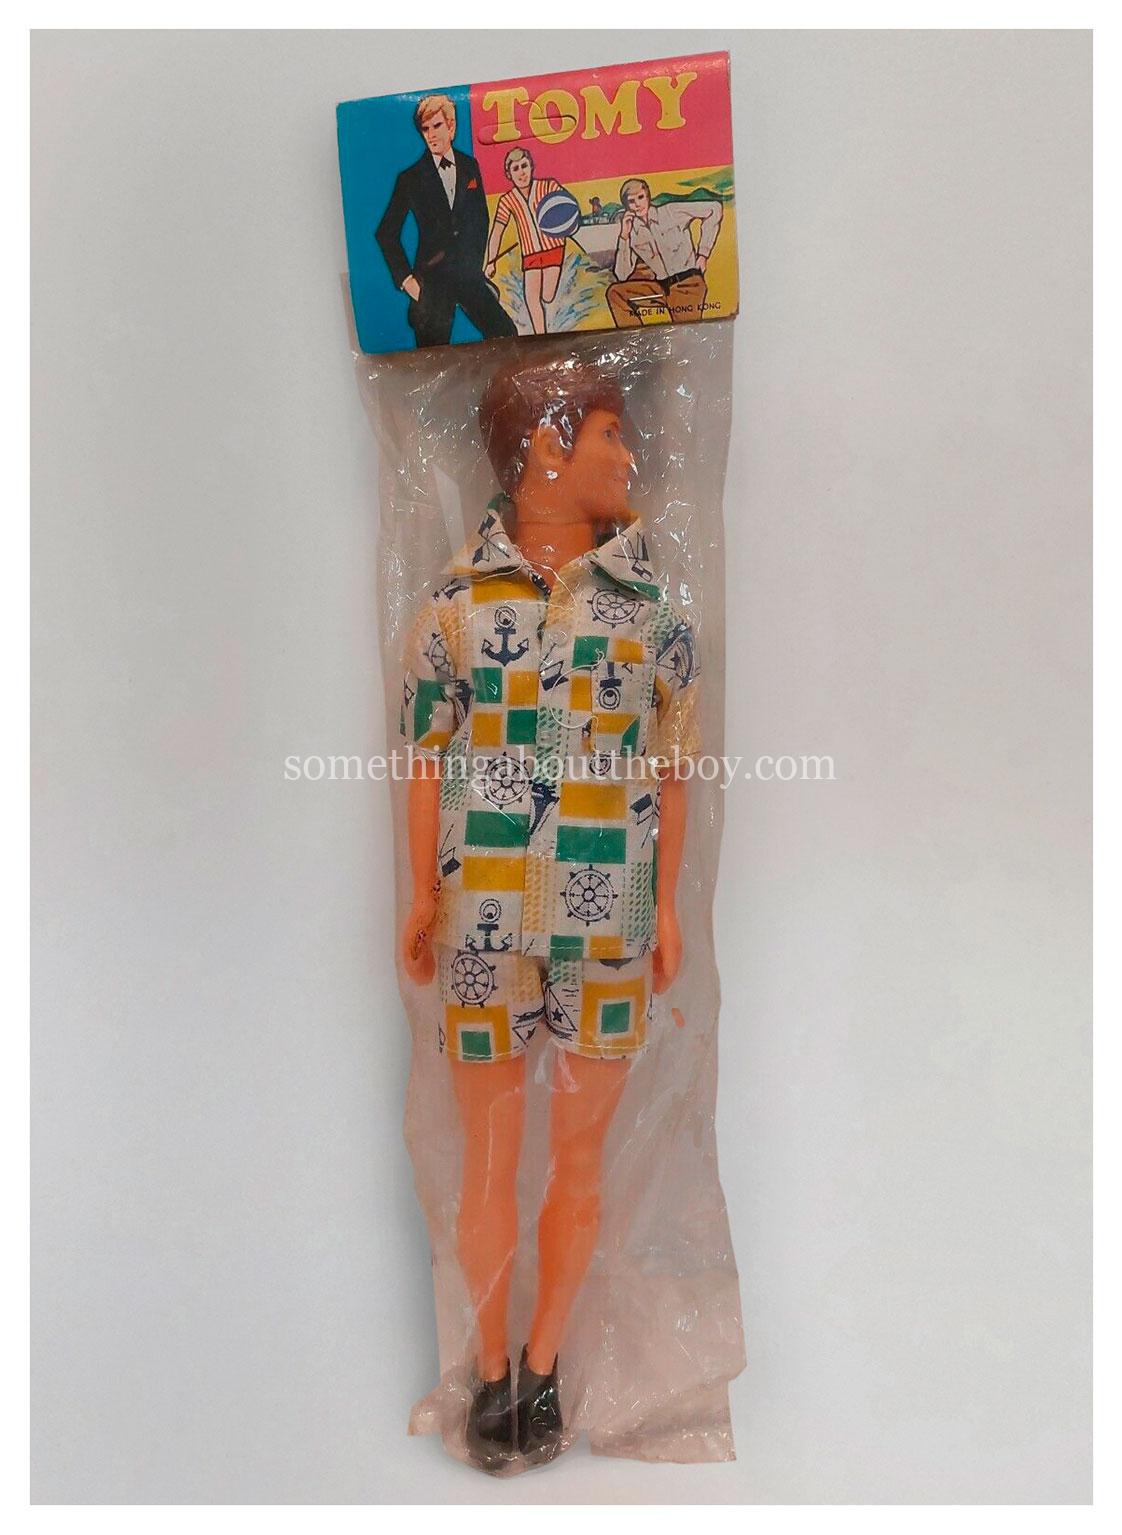 1970s Tomy doll